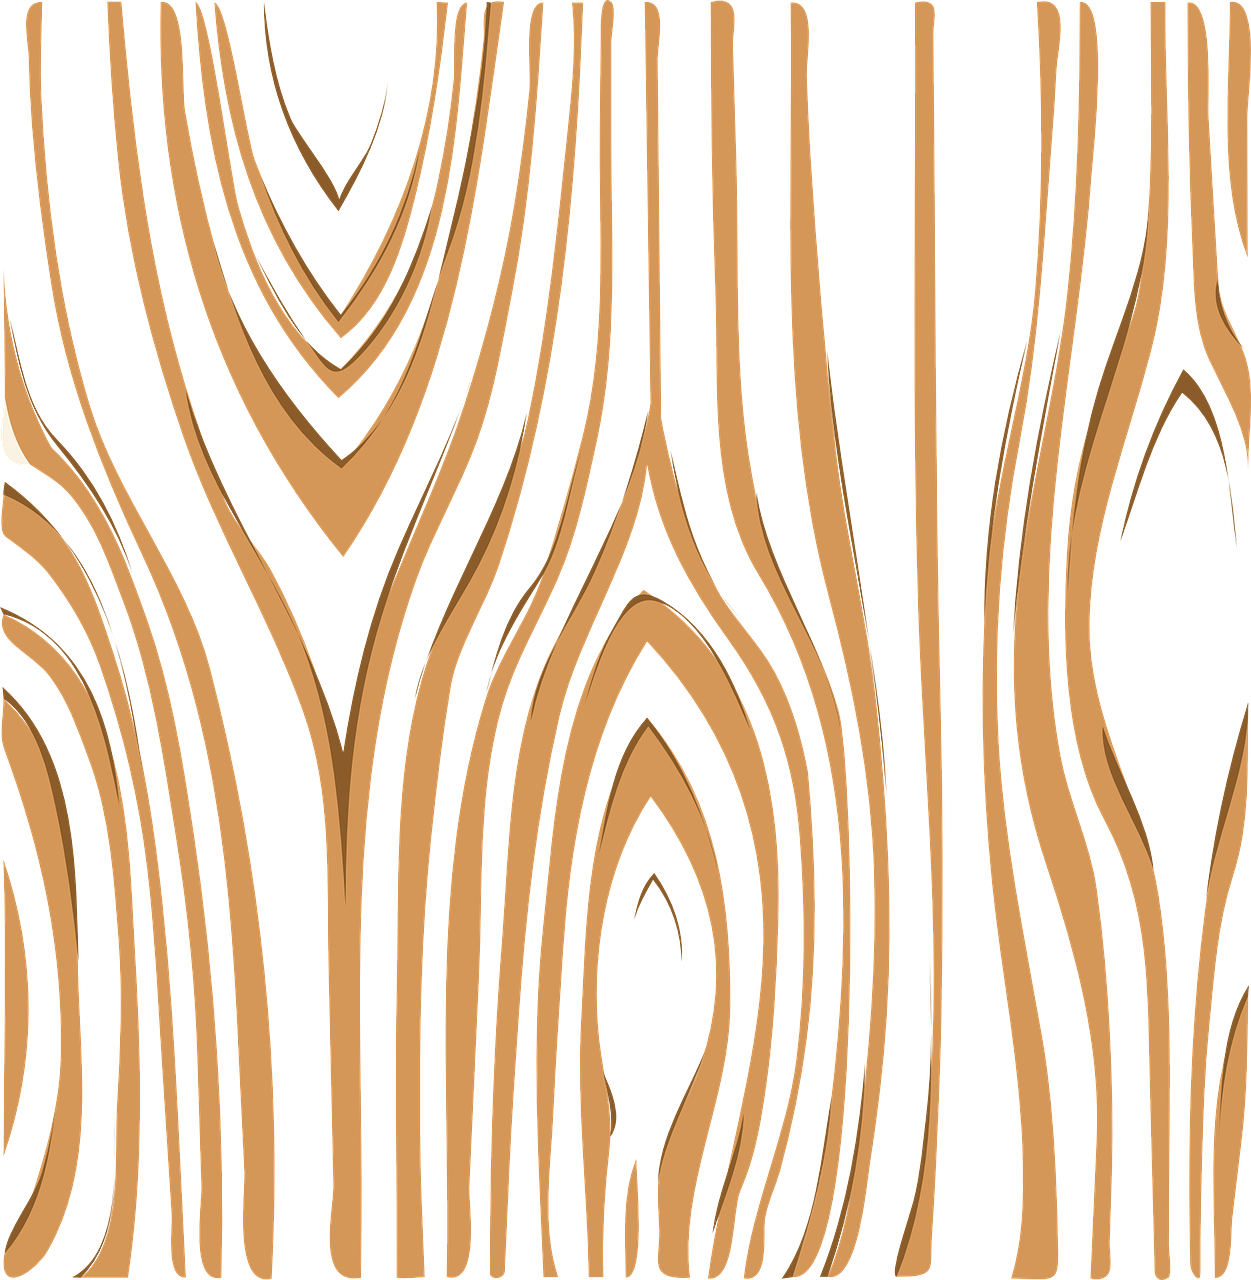 Wooden patterns. Деревянная структура вектор. Текстура дерева. Фактура дерева. Структура дерева вектор.